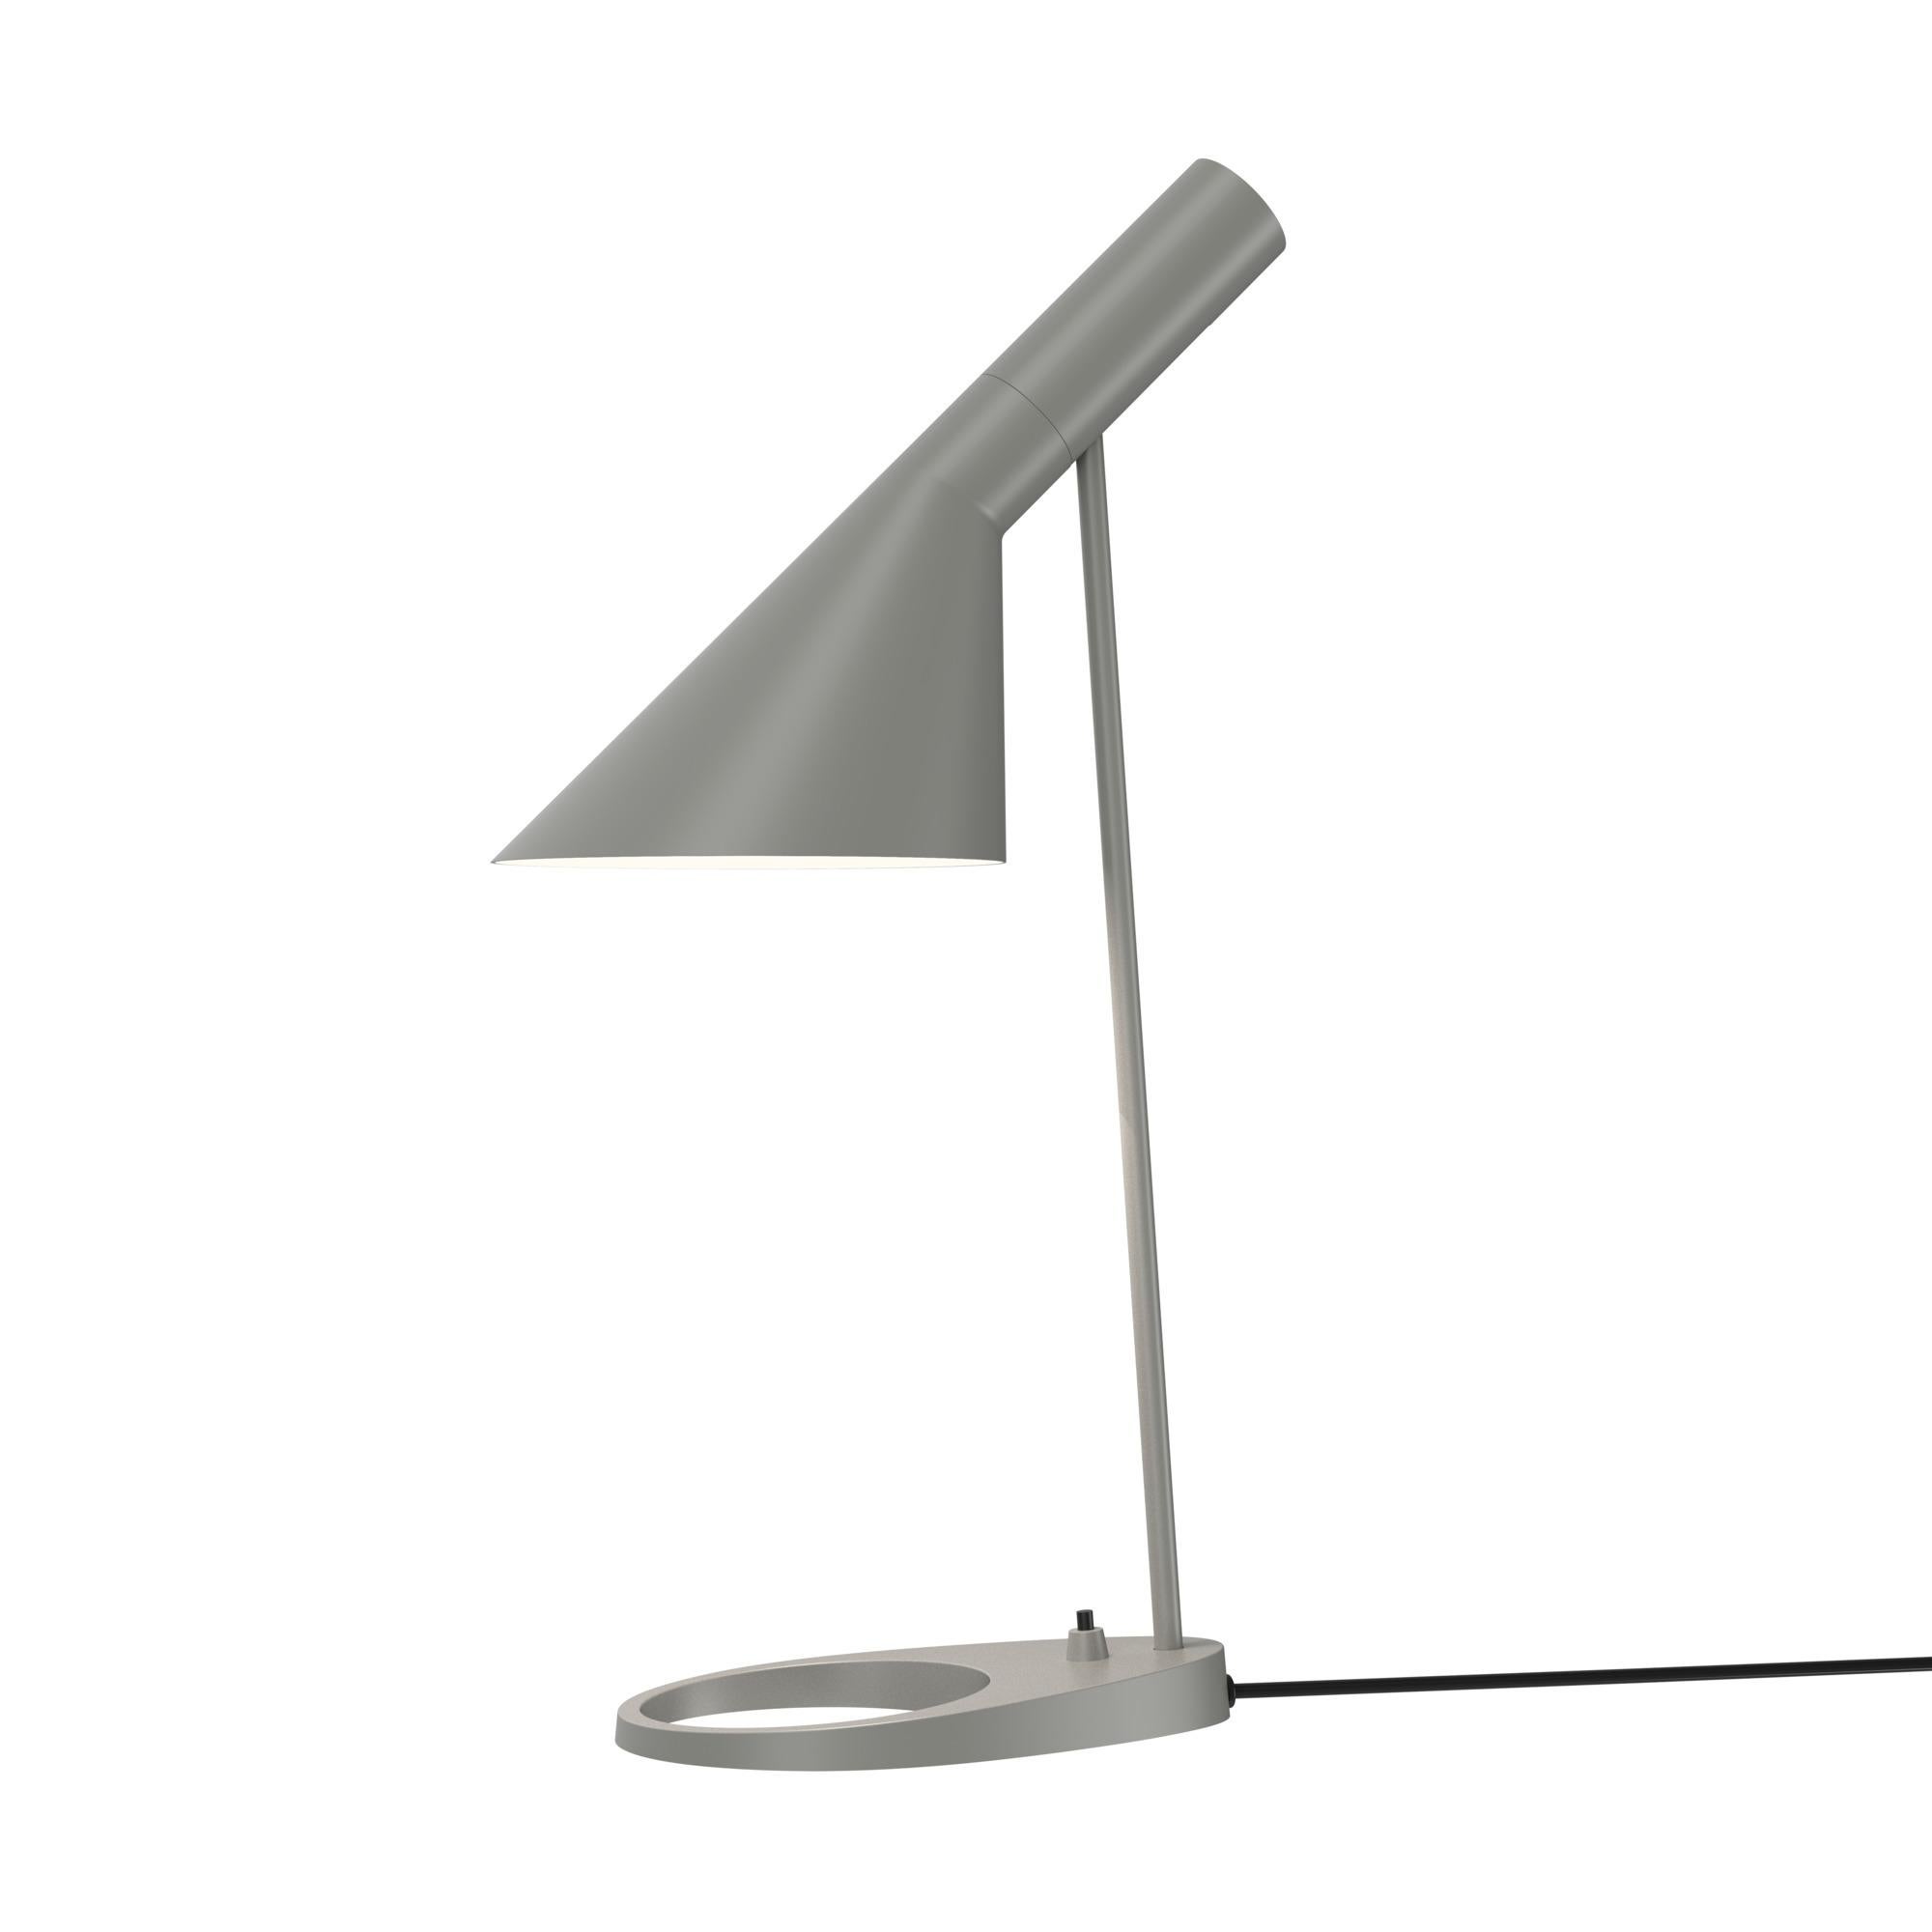 Arne Jacobsen AJ Table Lamp in Warm Sand for Louis Poulsen For Sale 6